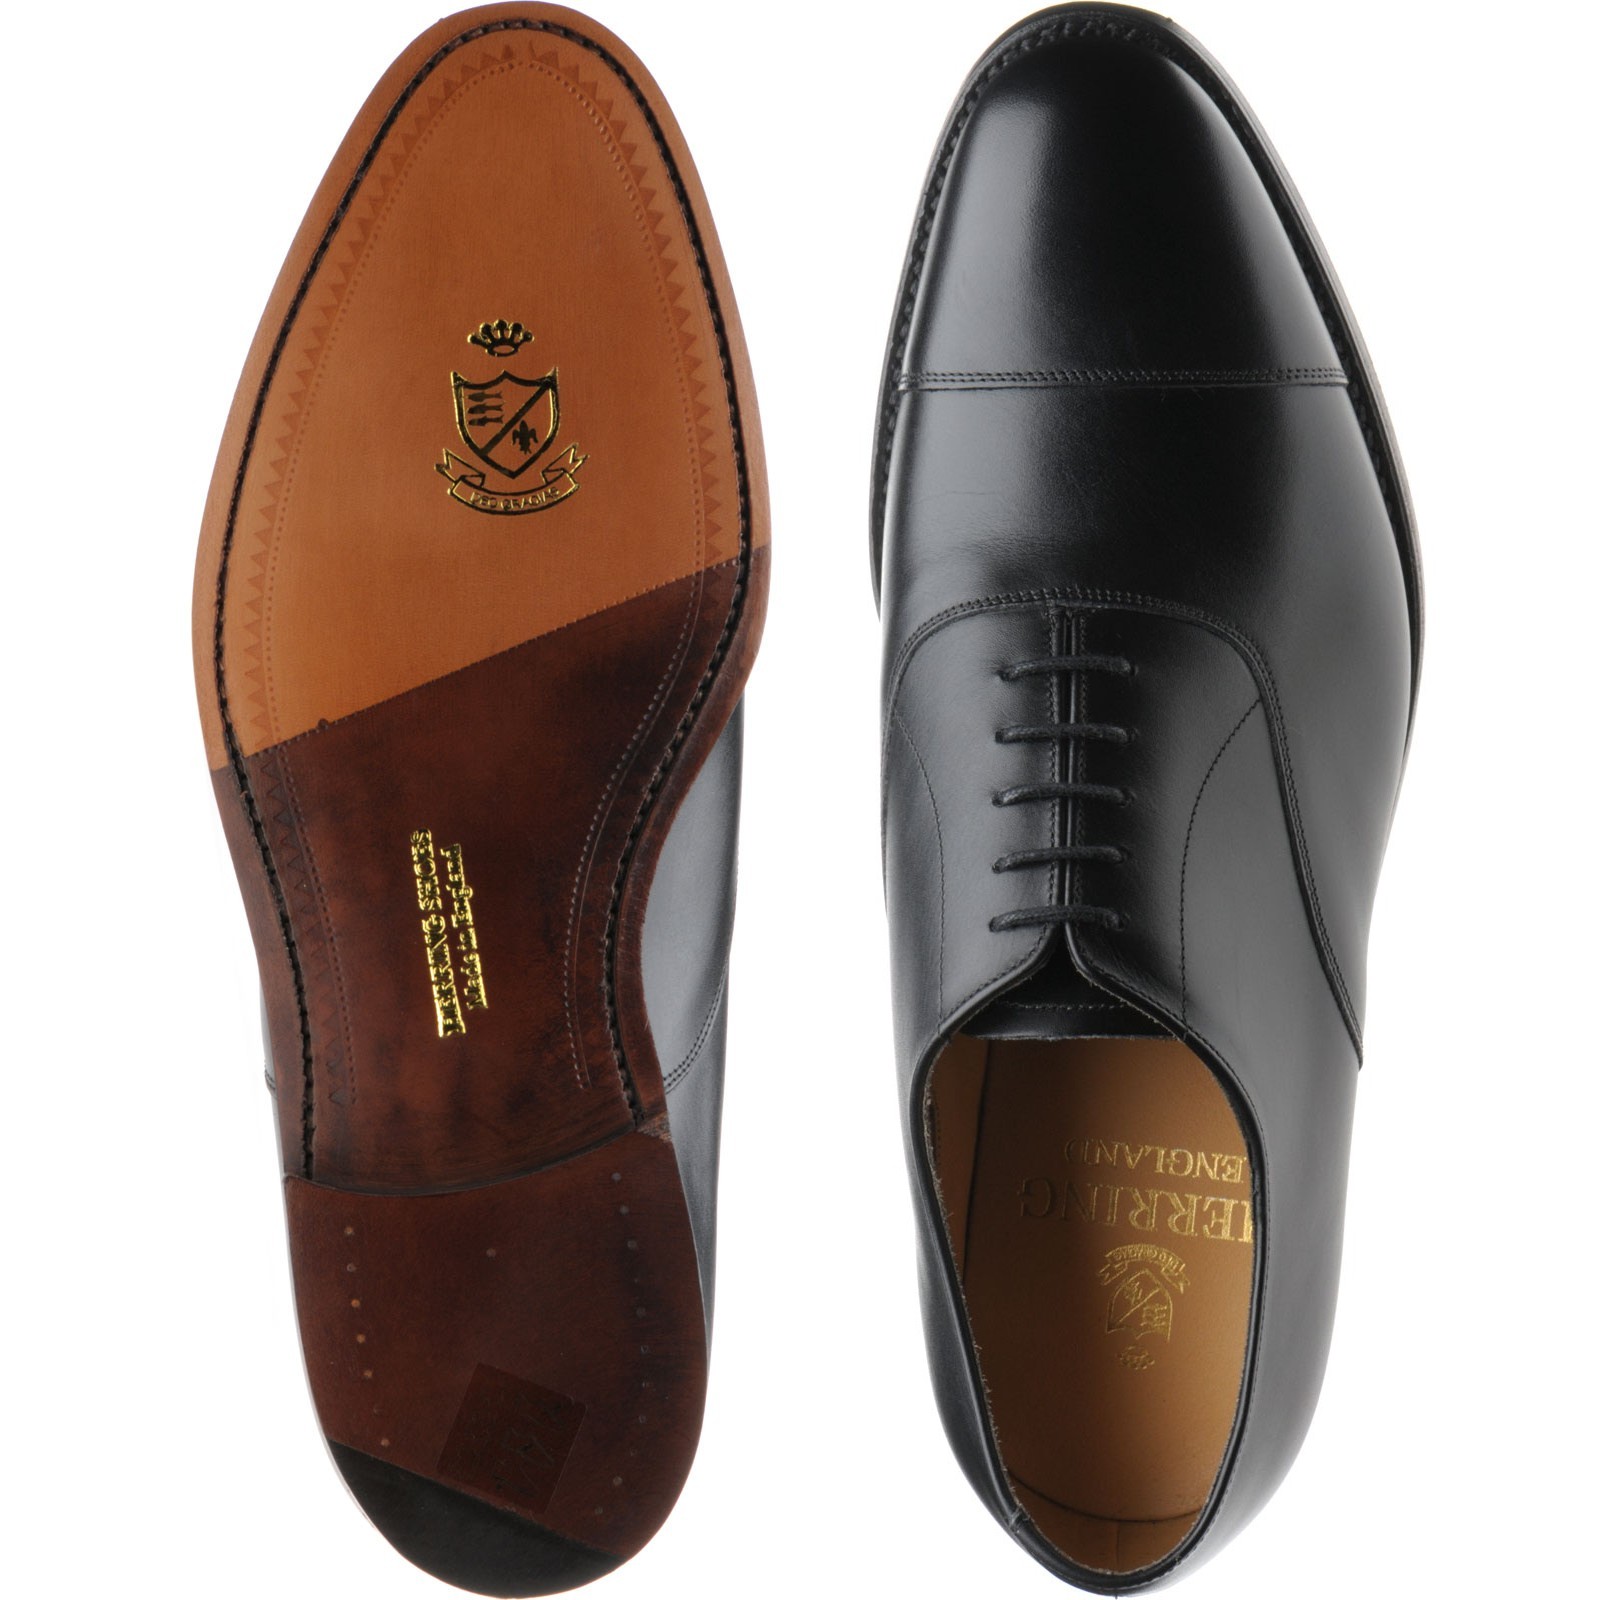 Herring shoes | Herring Classic | Mayfair Oxfords in Black Calf at ...